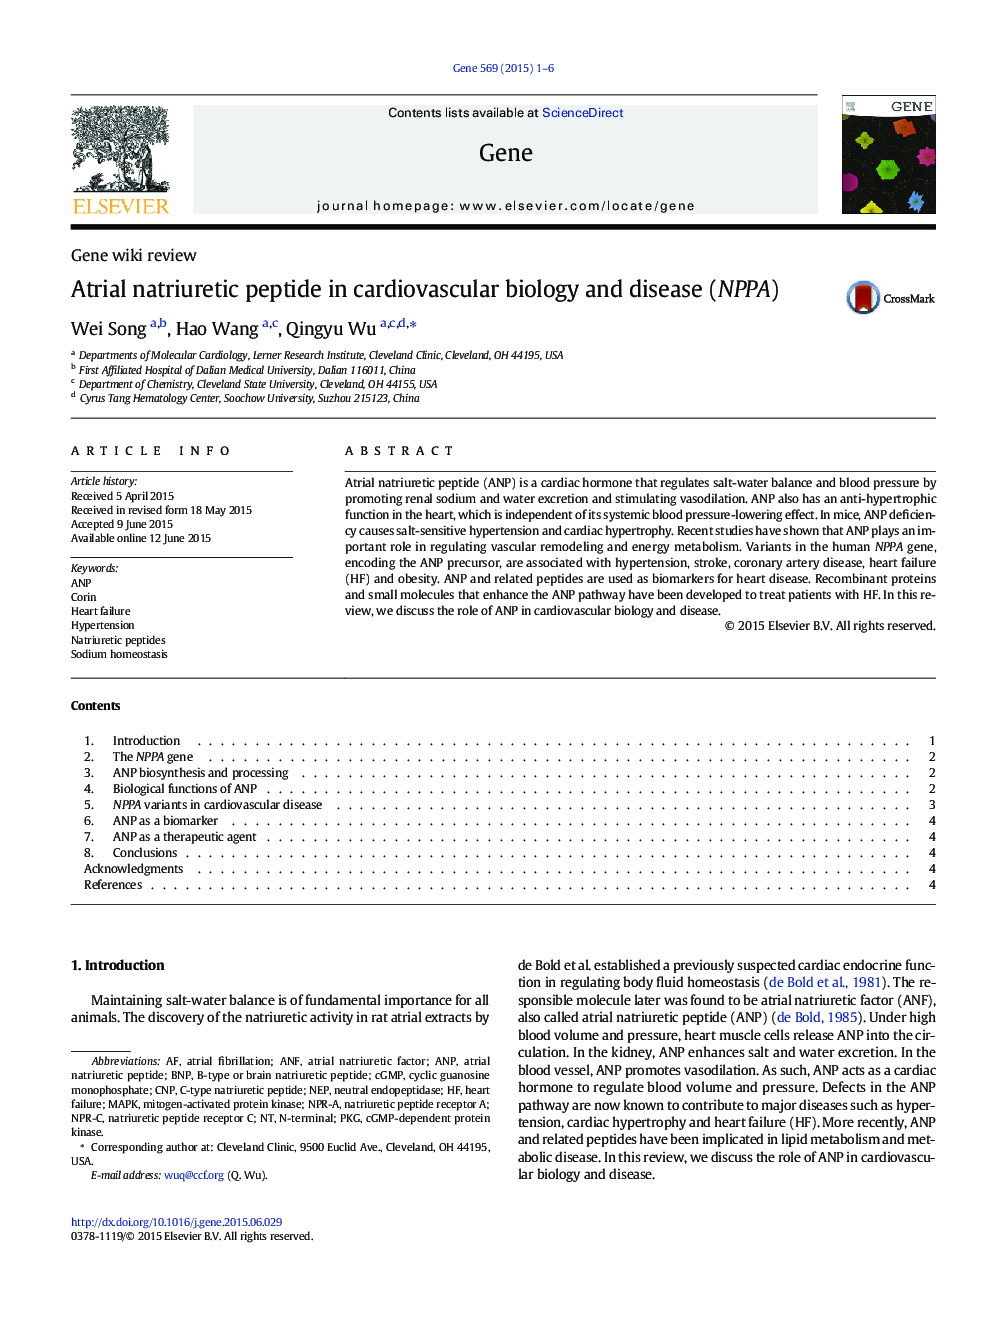 Atrial natriuretic peptide in cardiovascular biology and disease (NPPA)